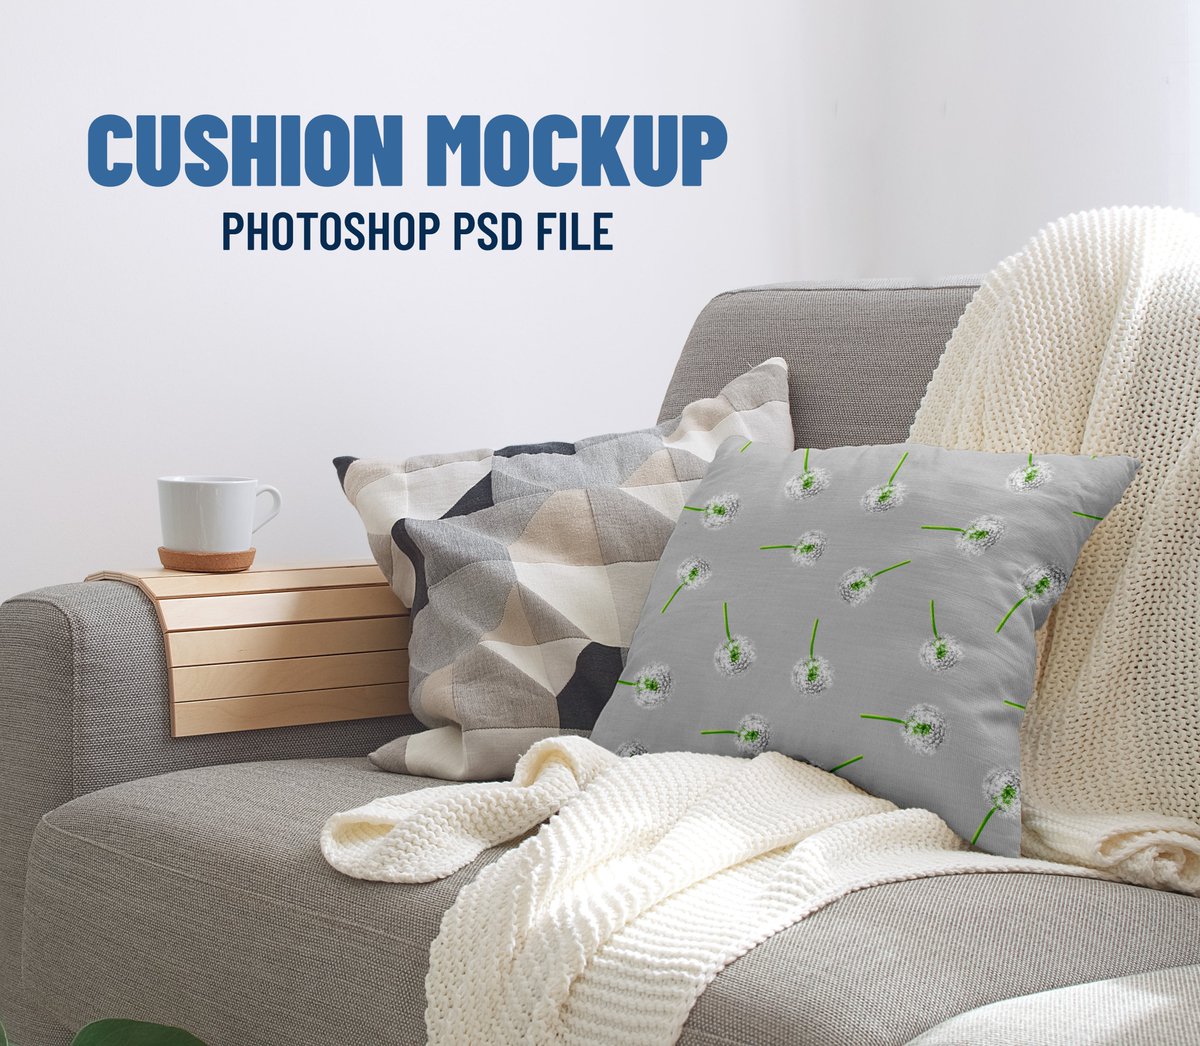 Cushion Mockup - Photoshop PSD File

#cushion #cushions #cushionmockup #psd #mockup #psdmockups #pattern #hometextile #textile